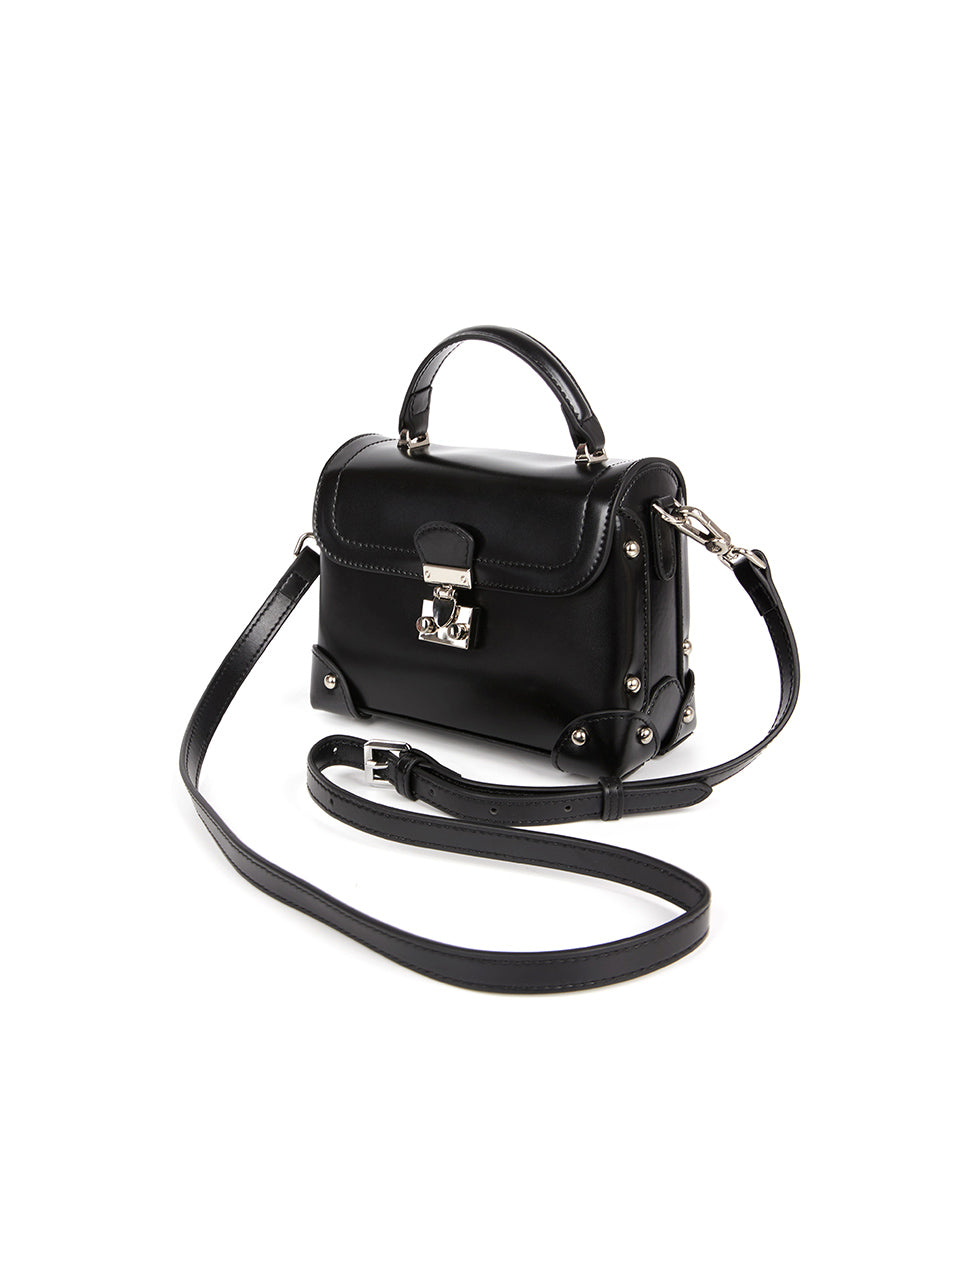 A-1551 Leather Satchel Bag (Cross strap Set)